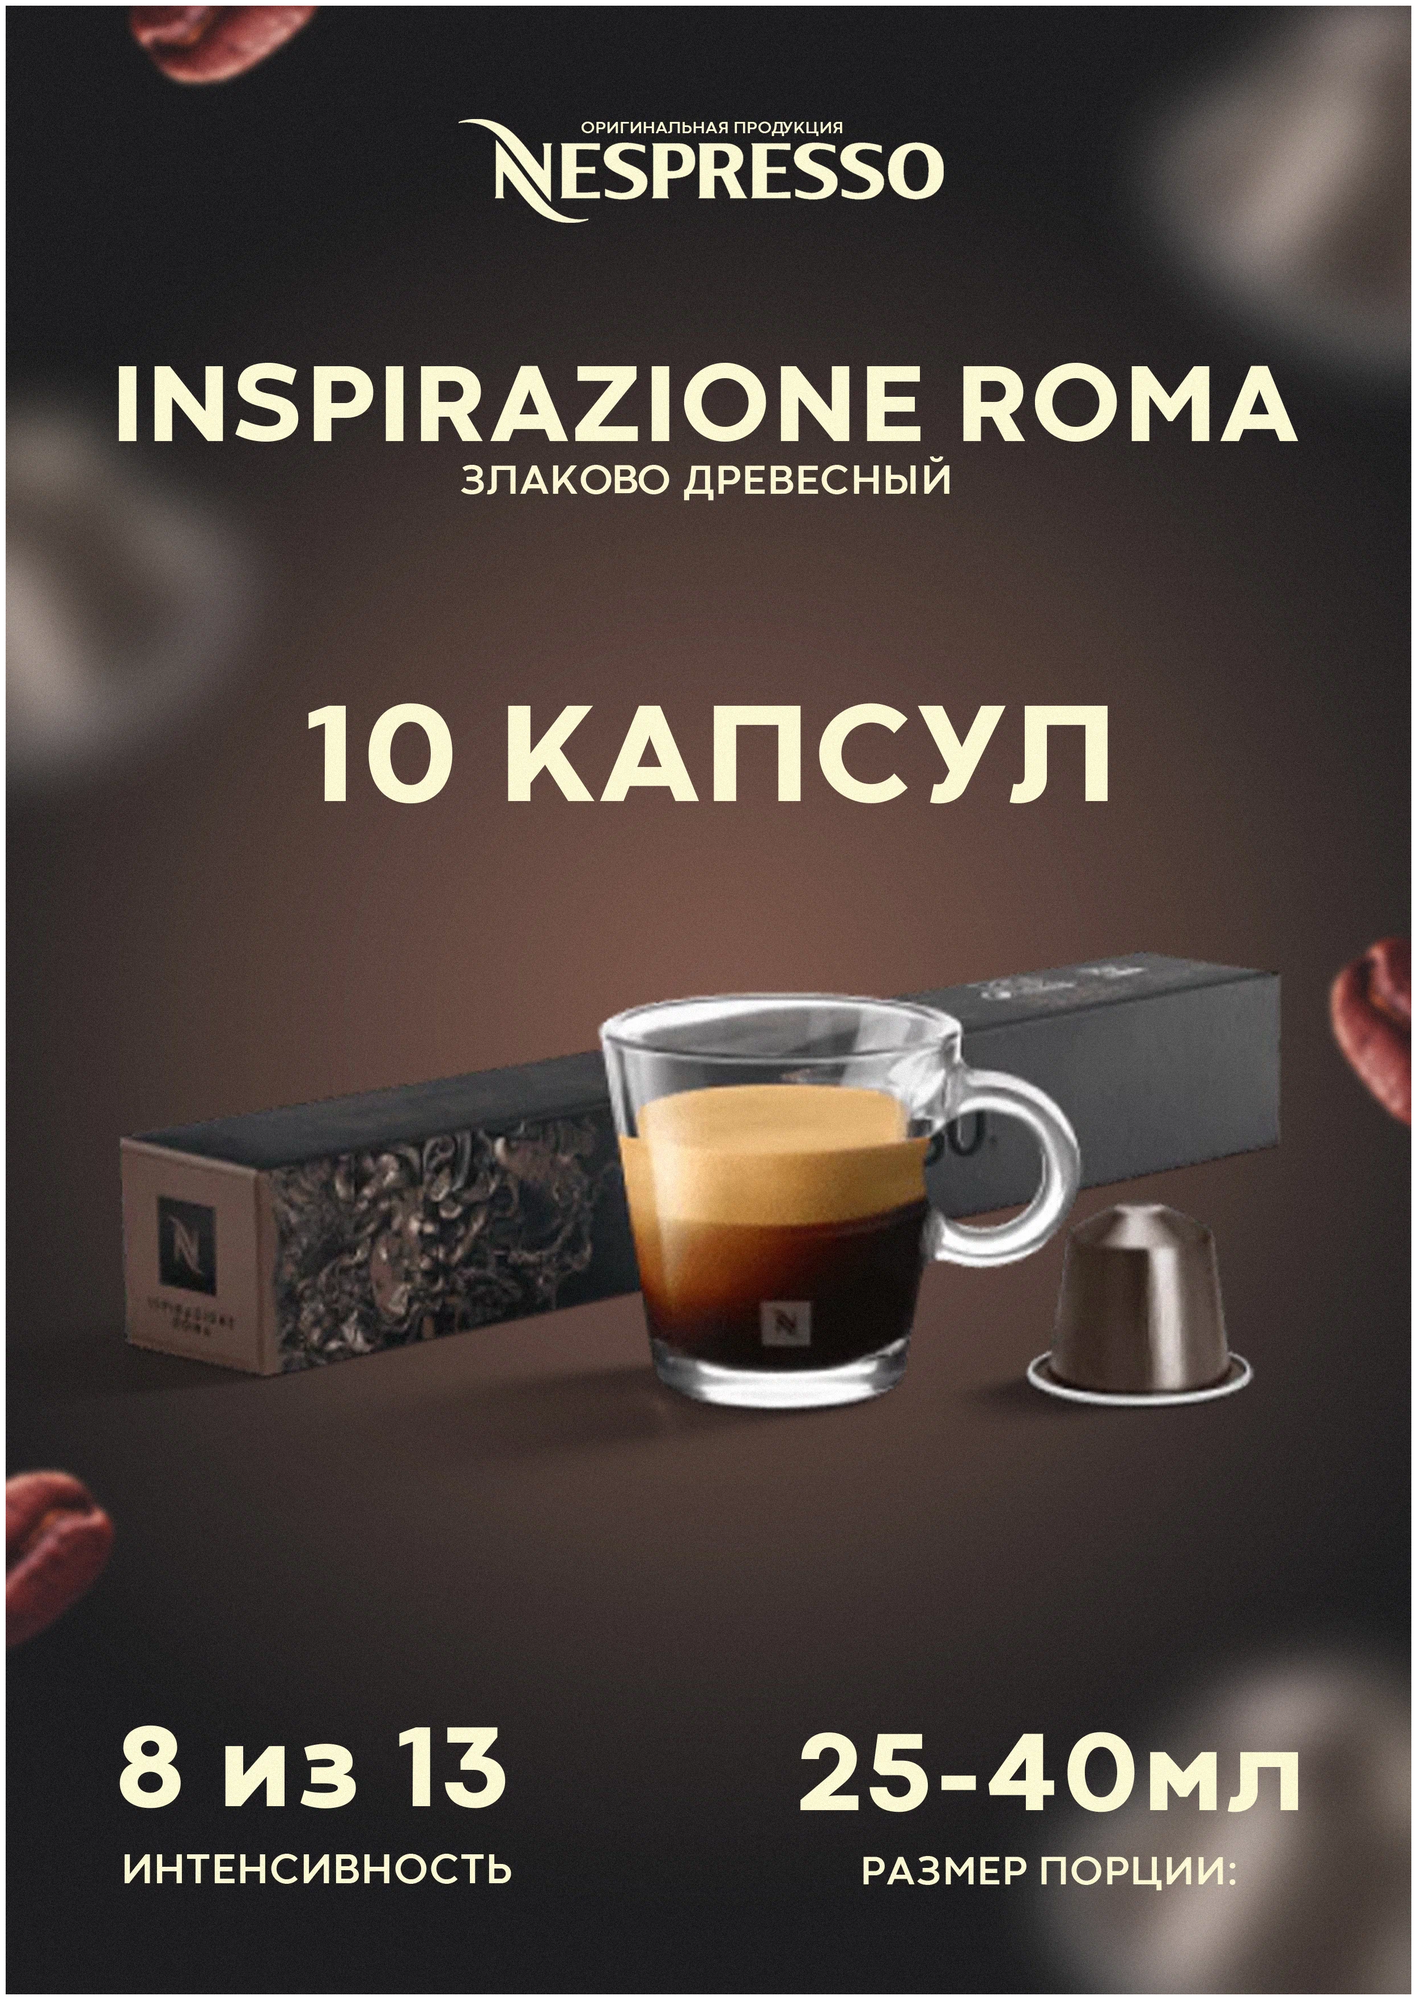 Кофе в капсулах Nespresso Ispirazione Italiana Roma 25-40 мл. 8/13 набор капсул Неспрессо для кофемашины Original 10 шт